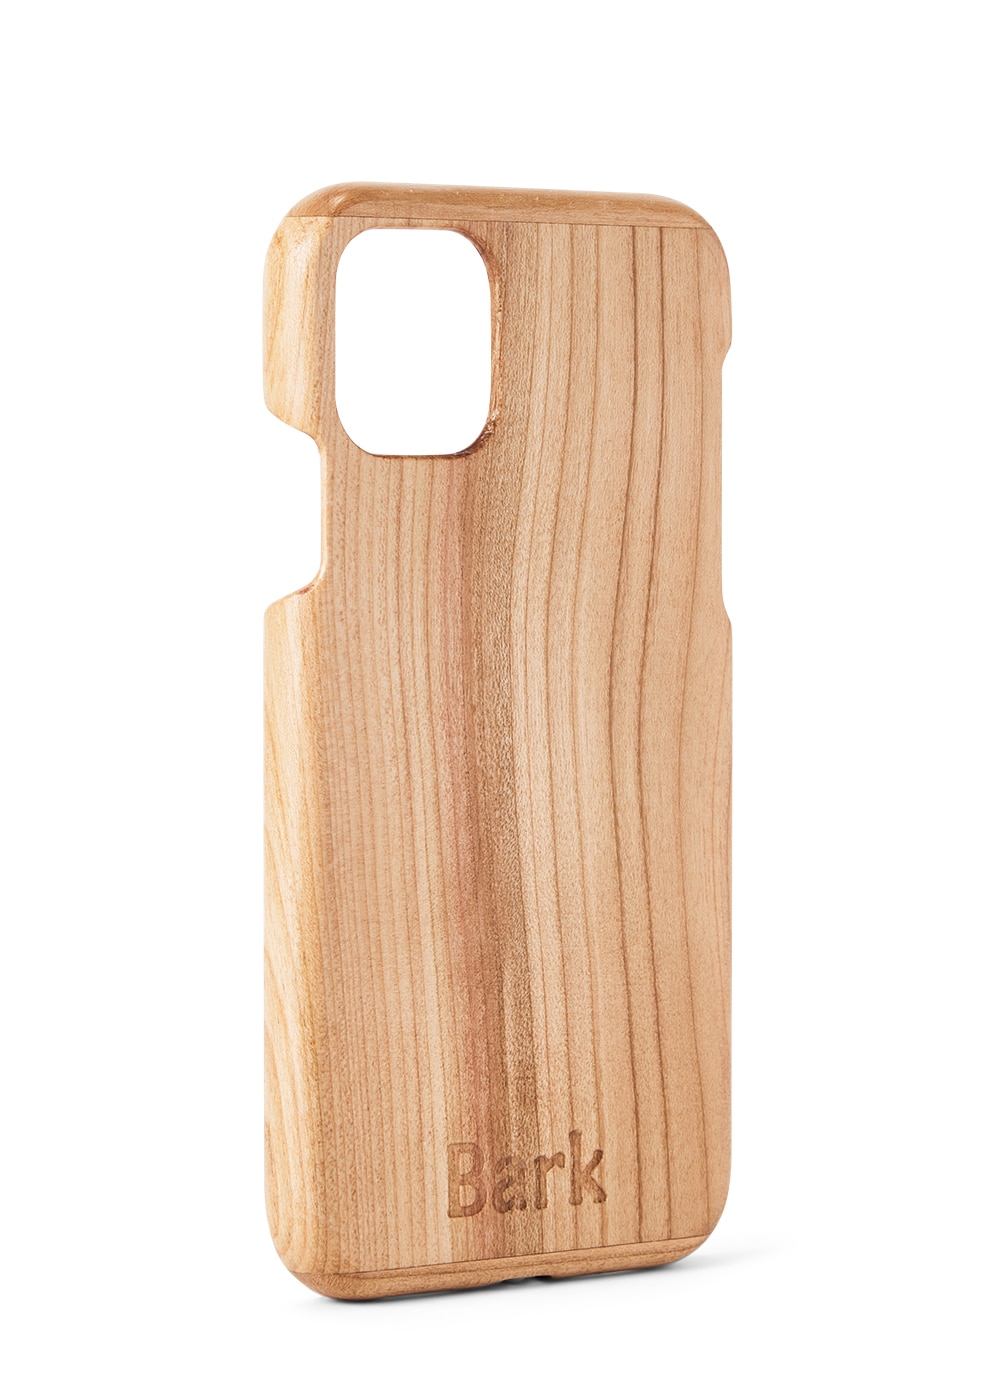 iPhone 11 custodia in legno di latifoglia svedese - Körsbär